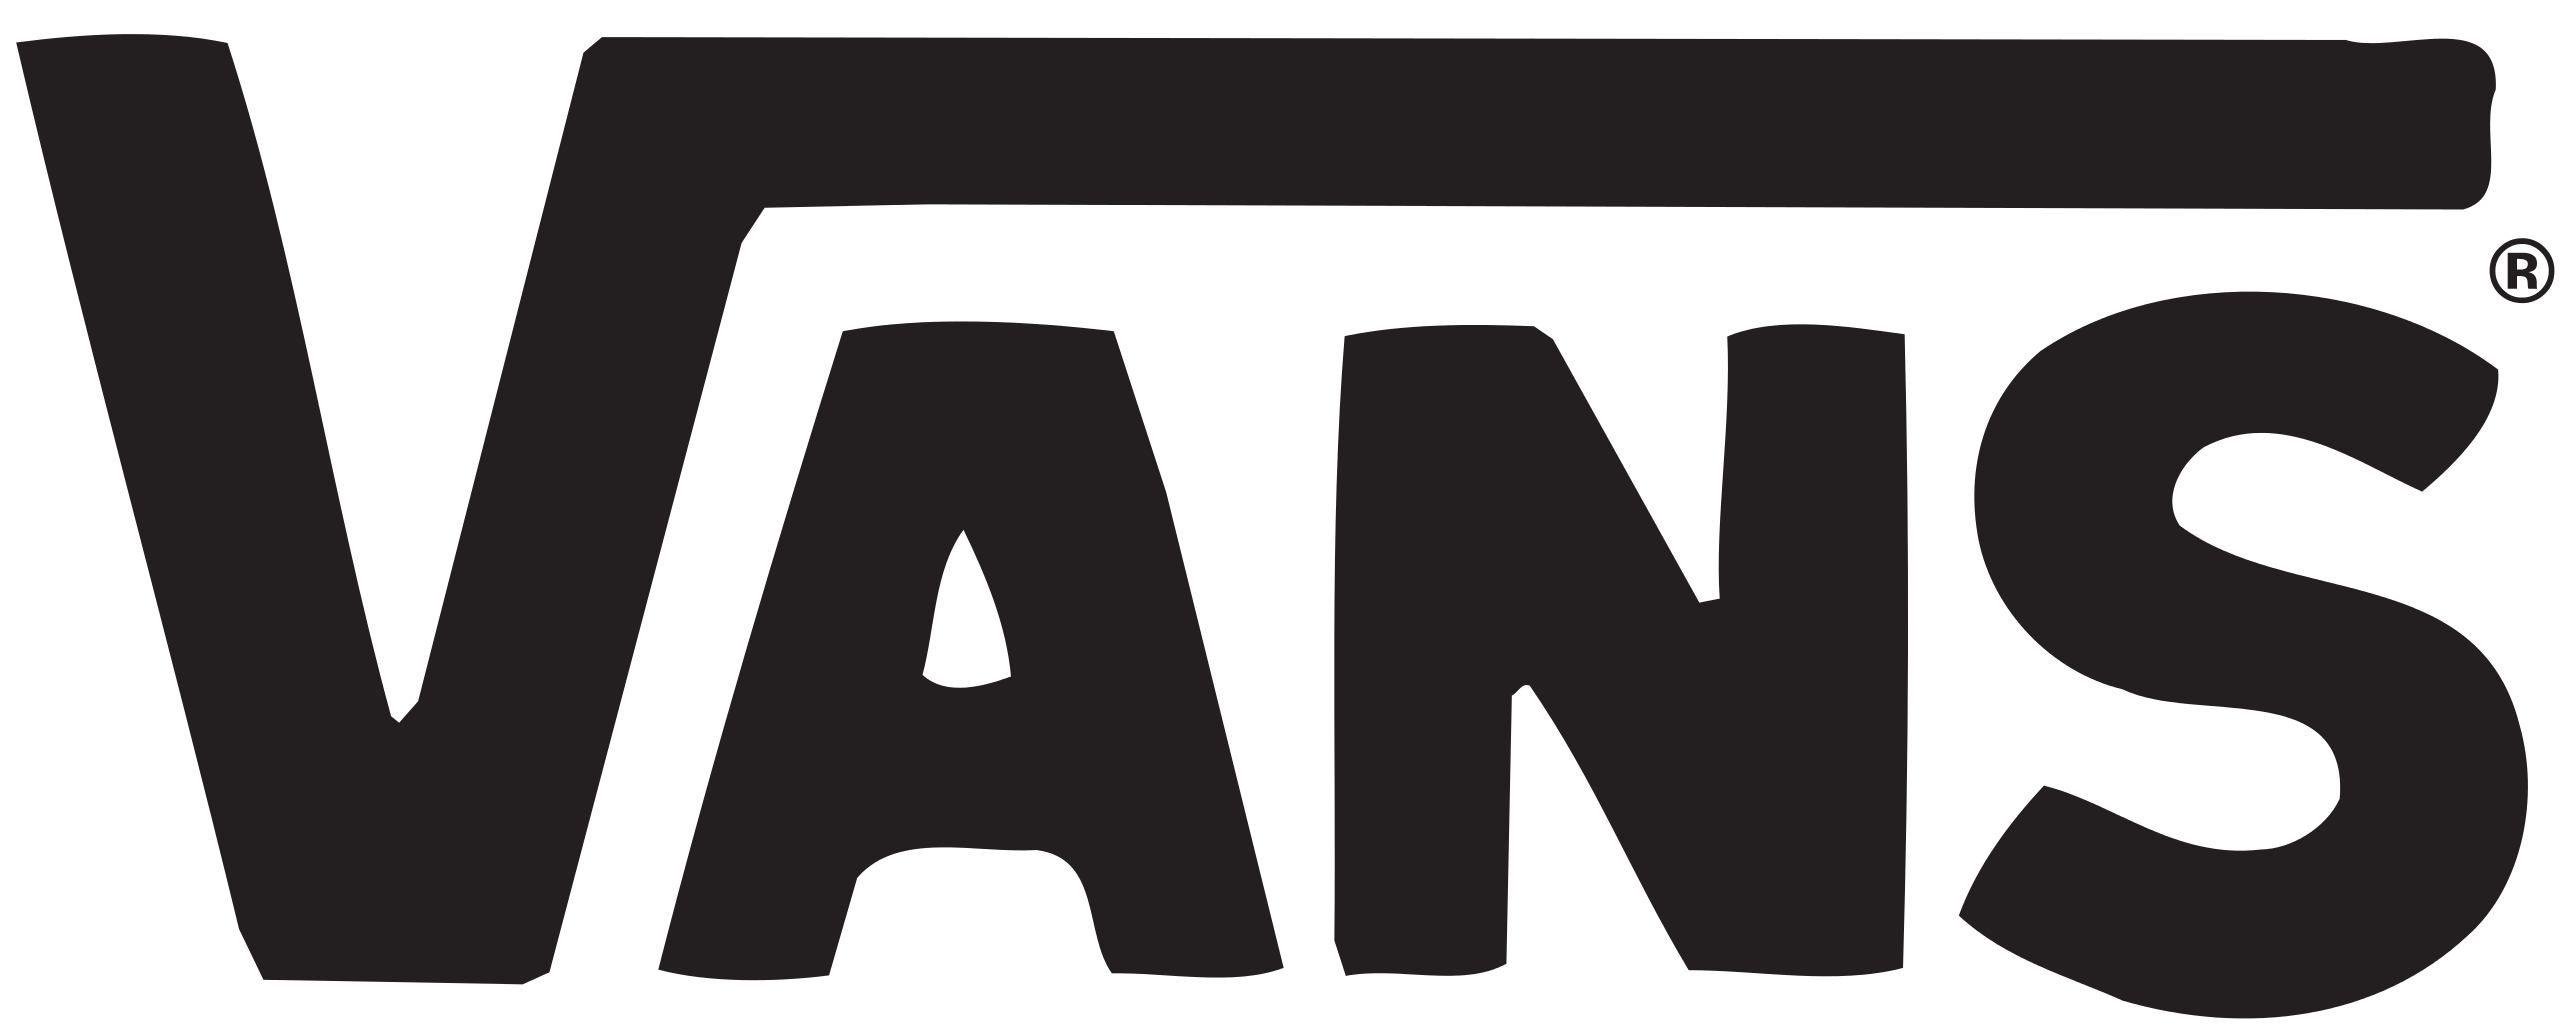 Archivo:Vans-logo.svg - Wikipedia, la enciclopedia libre